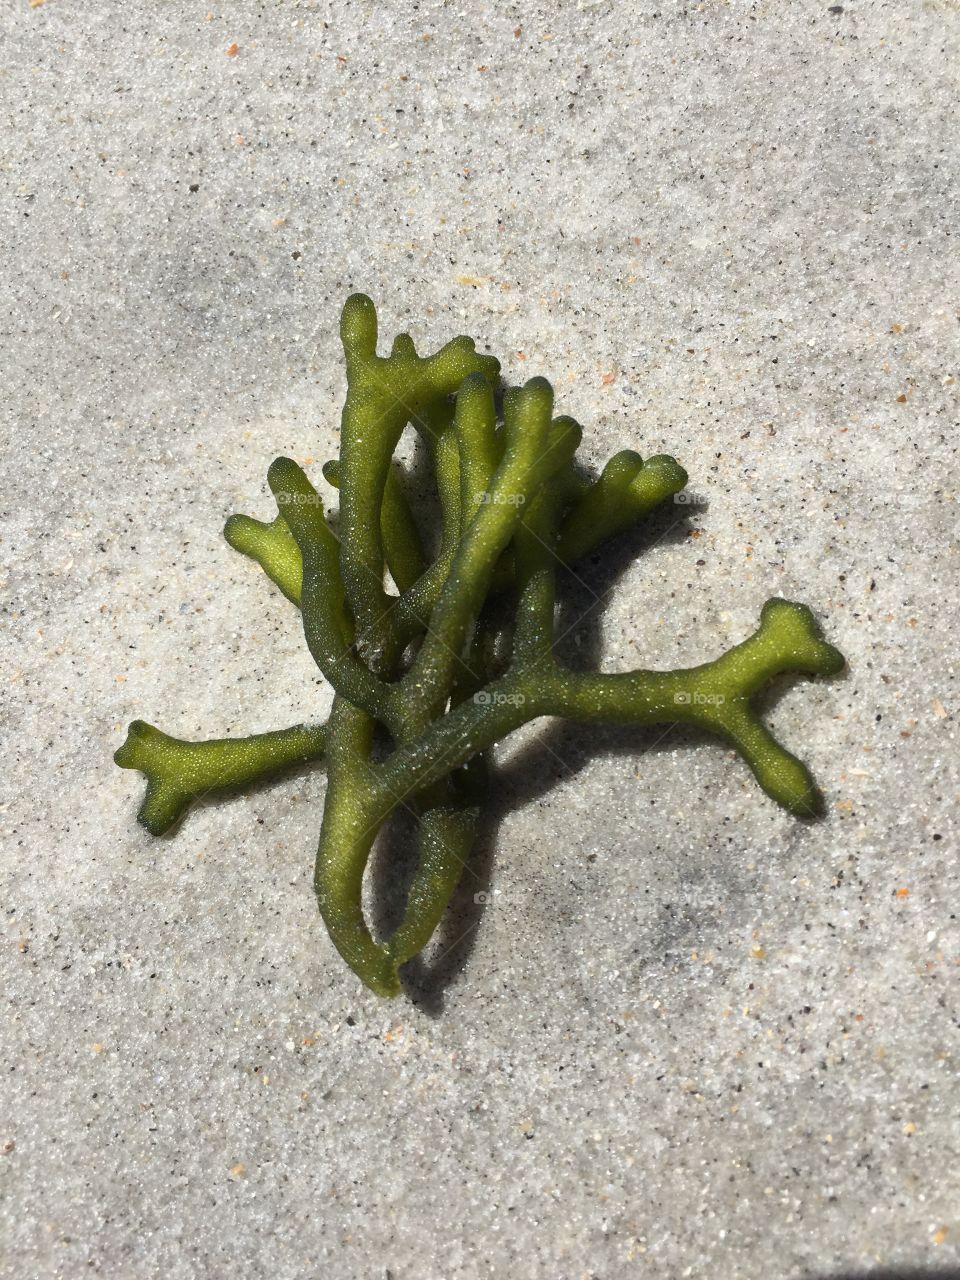 Green sea fingers.